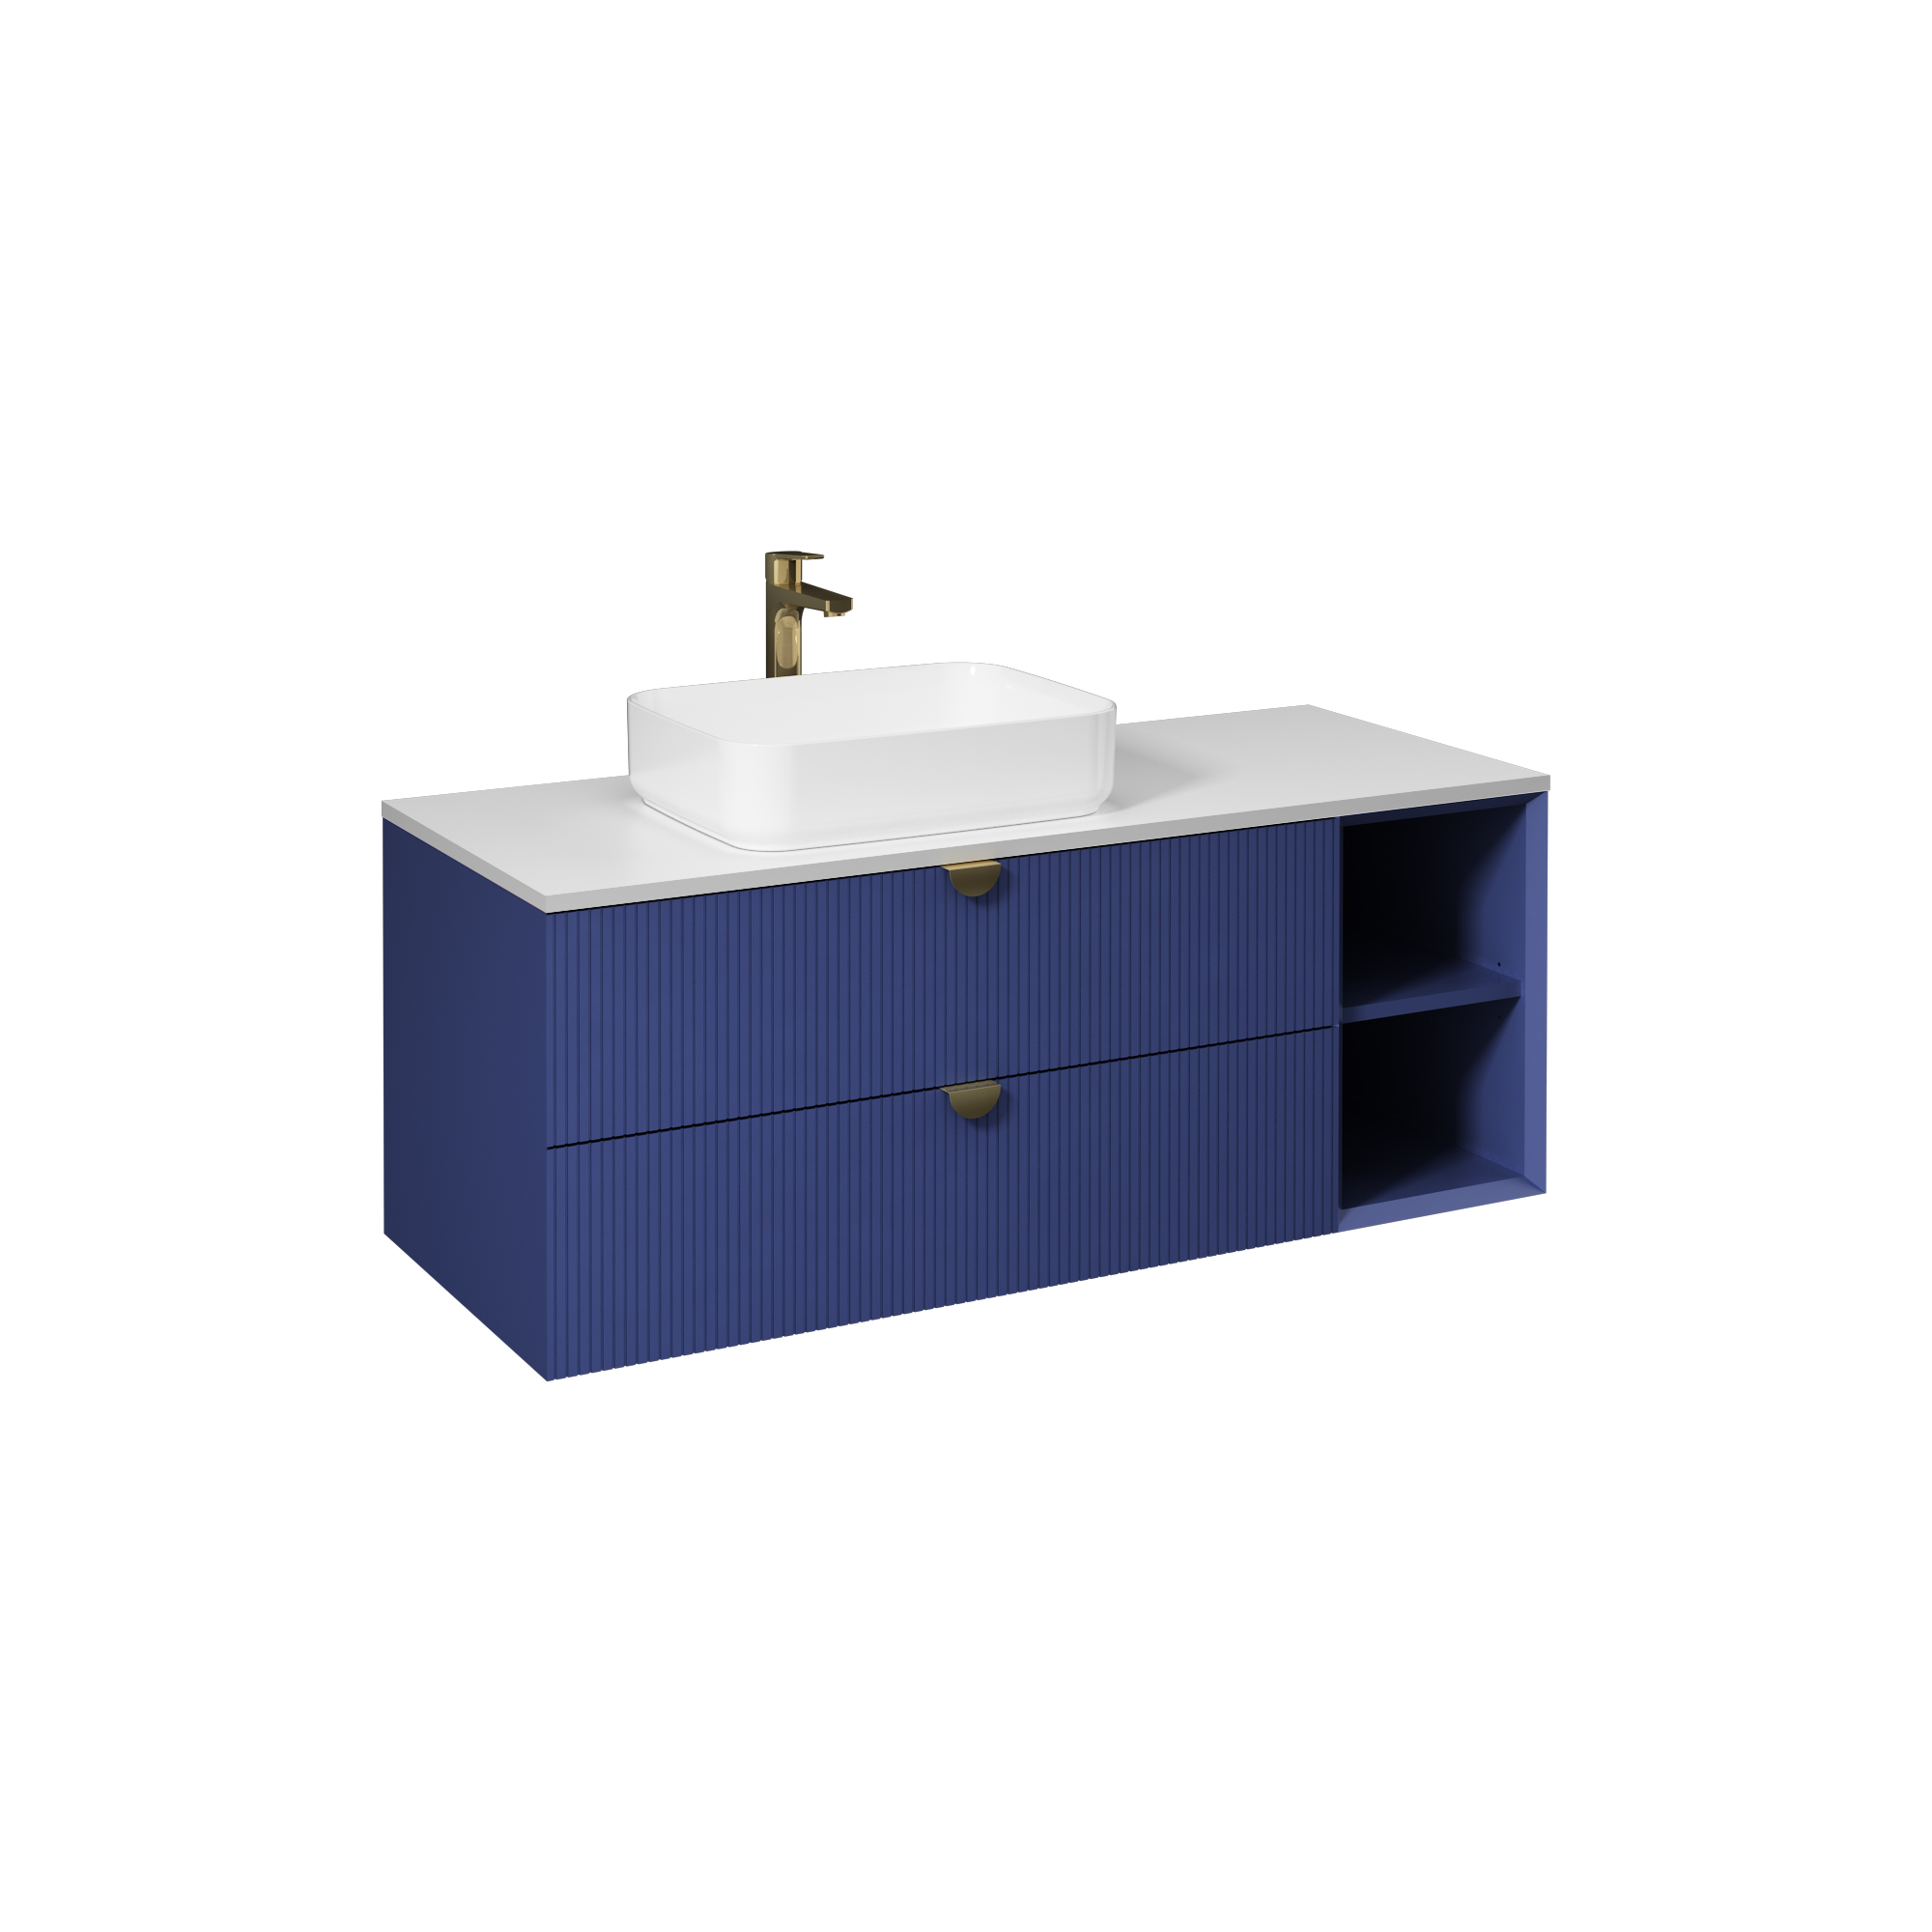 Infinity Washbasin Cabinet Night Blue, with Isvea Blue Washbasin 39"